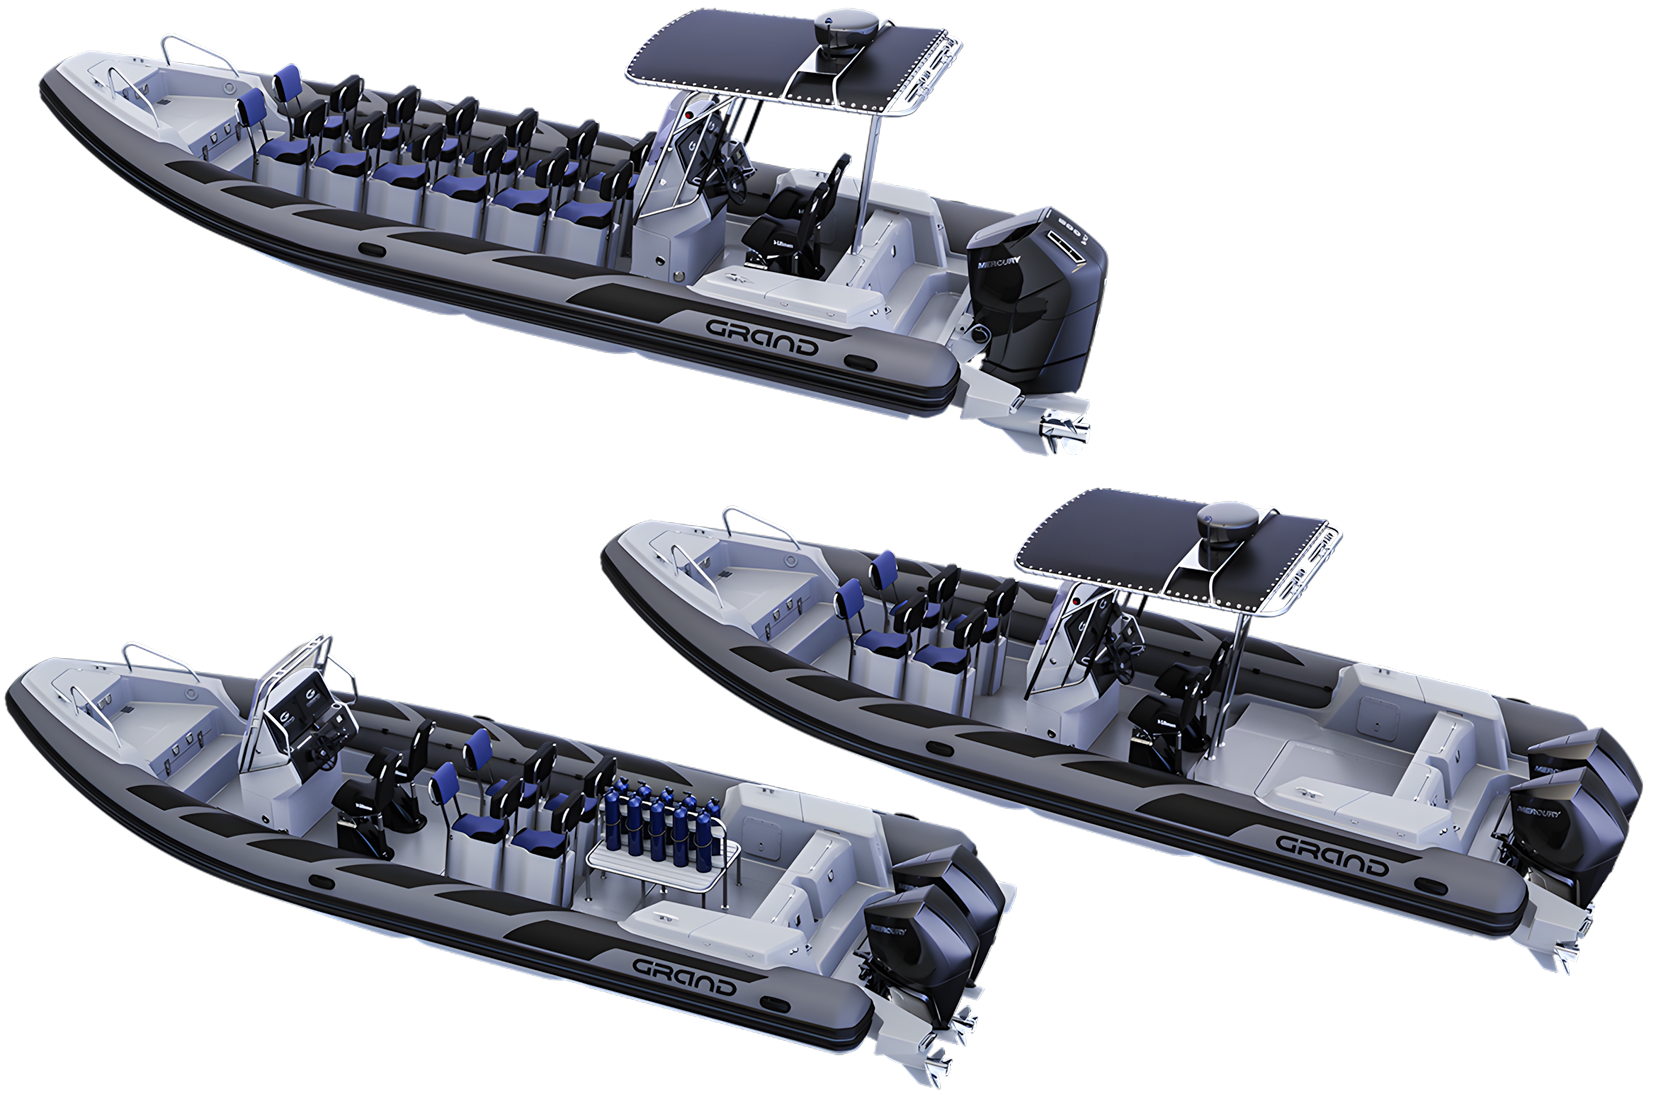 New RIB boat model release – D950